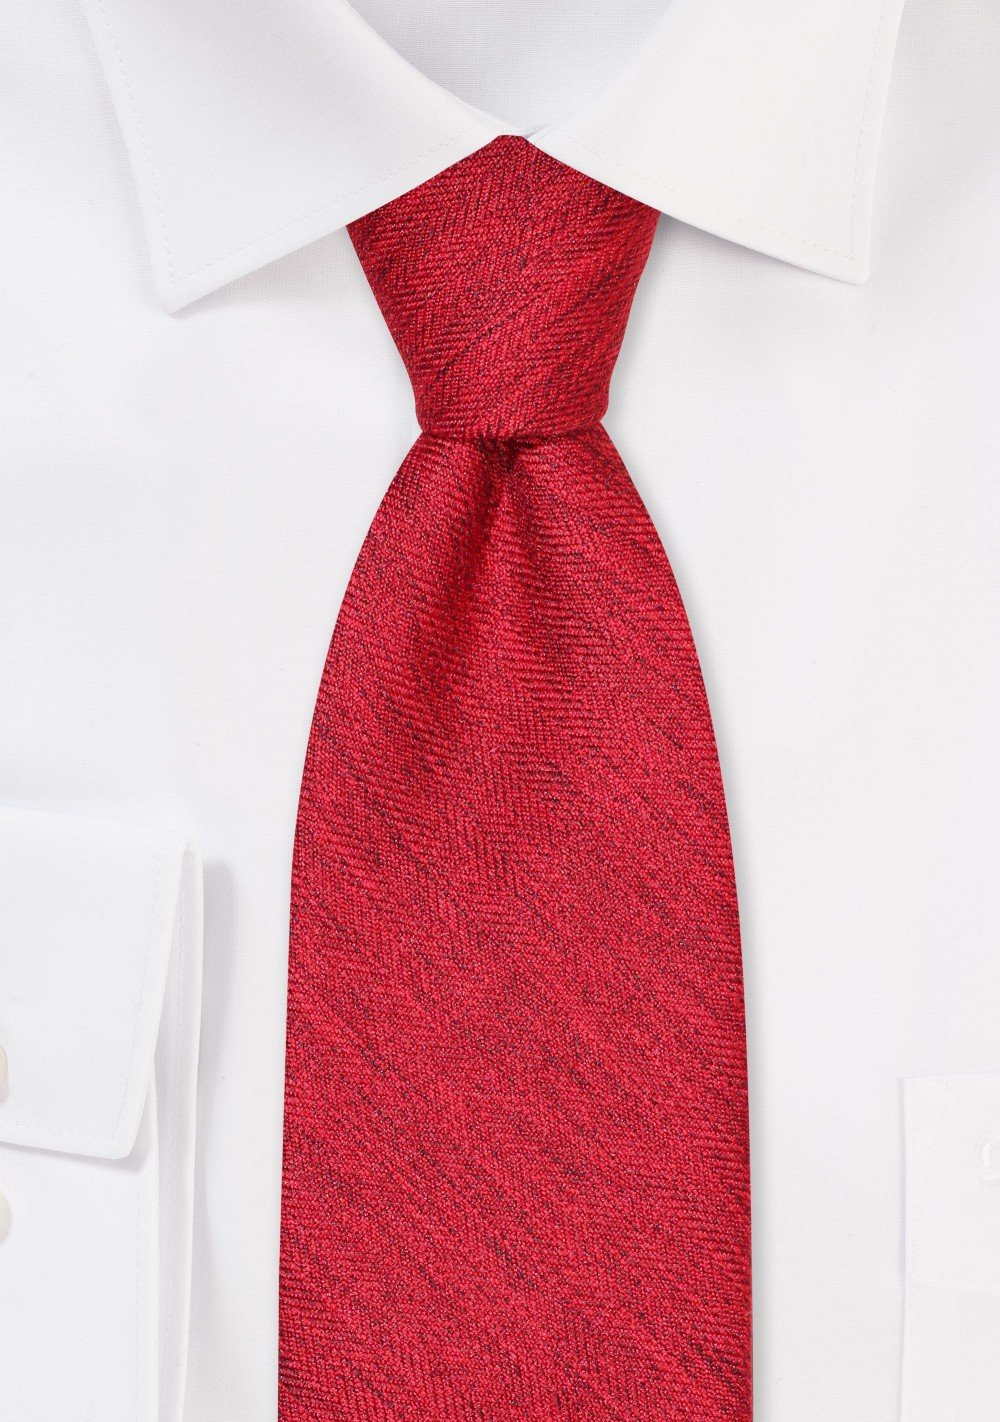 Herringbone Check Cotton Tie Cherry Red